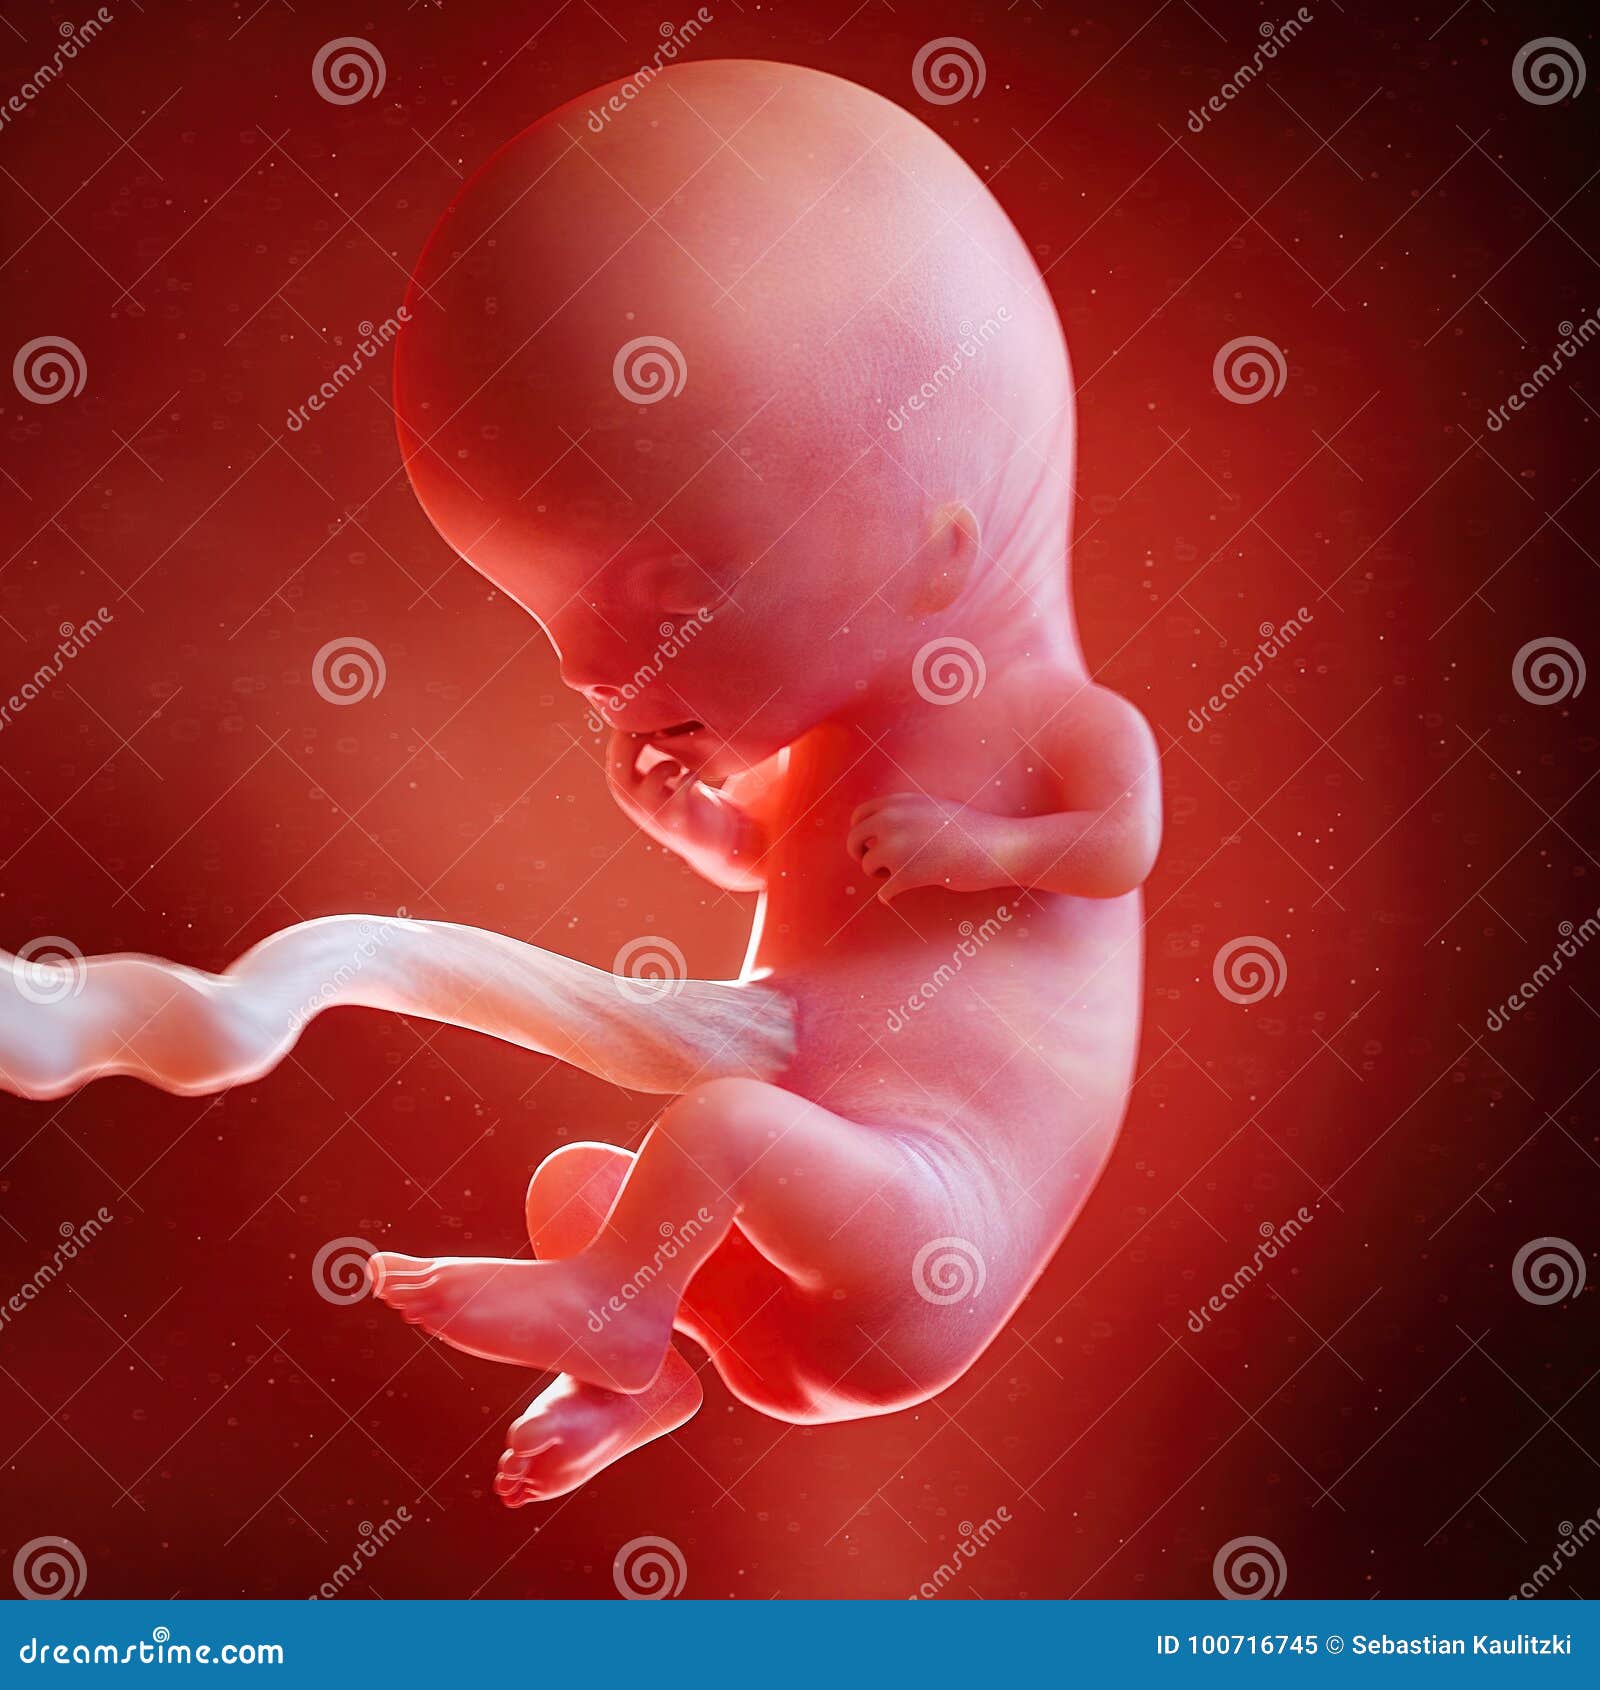 a fetus week 11